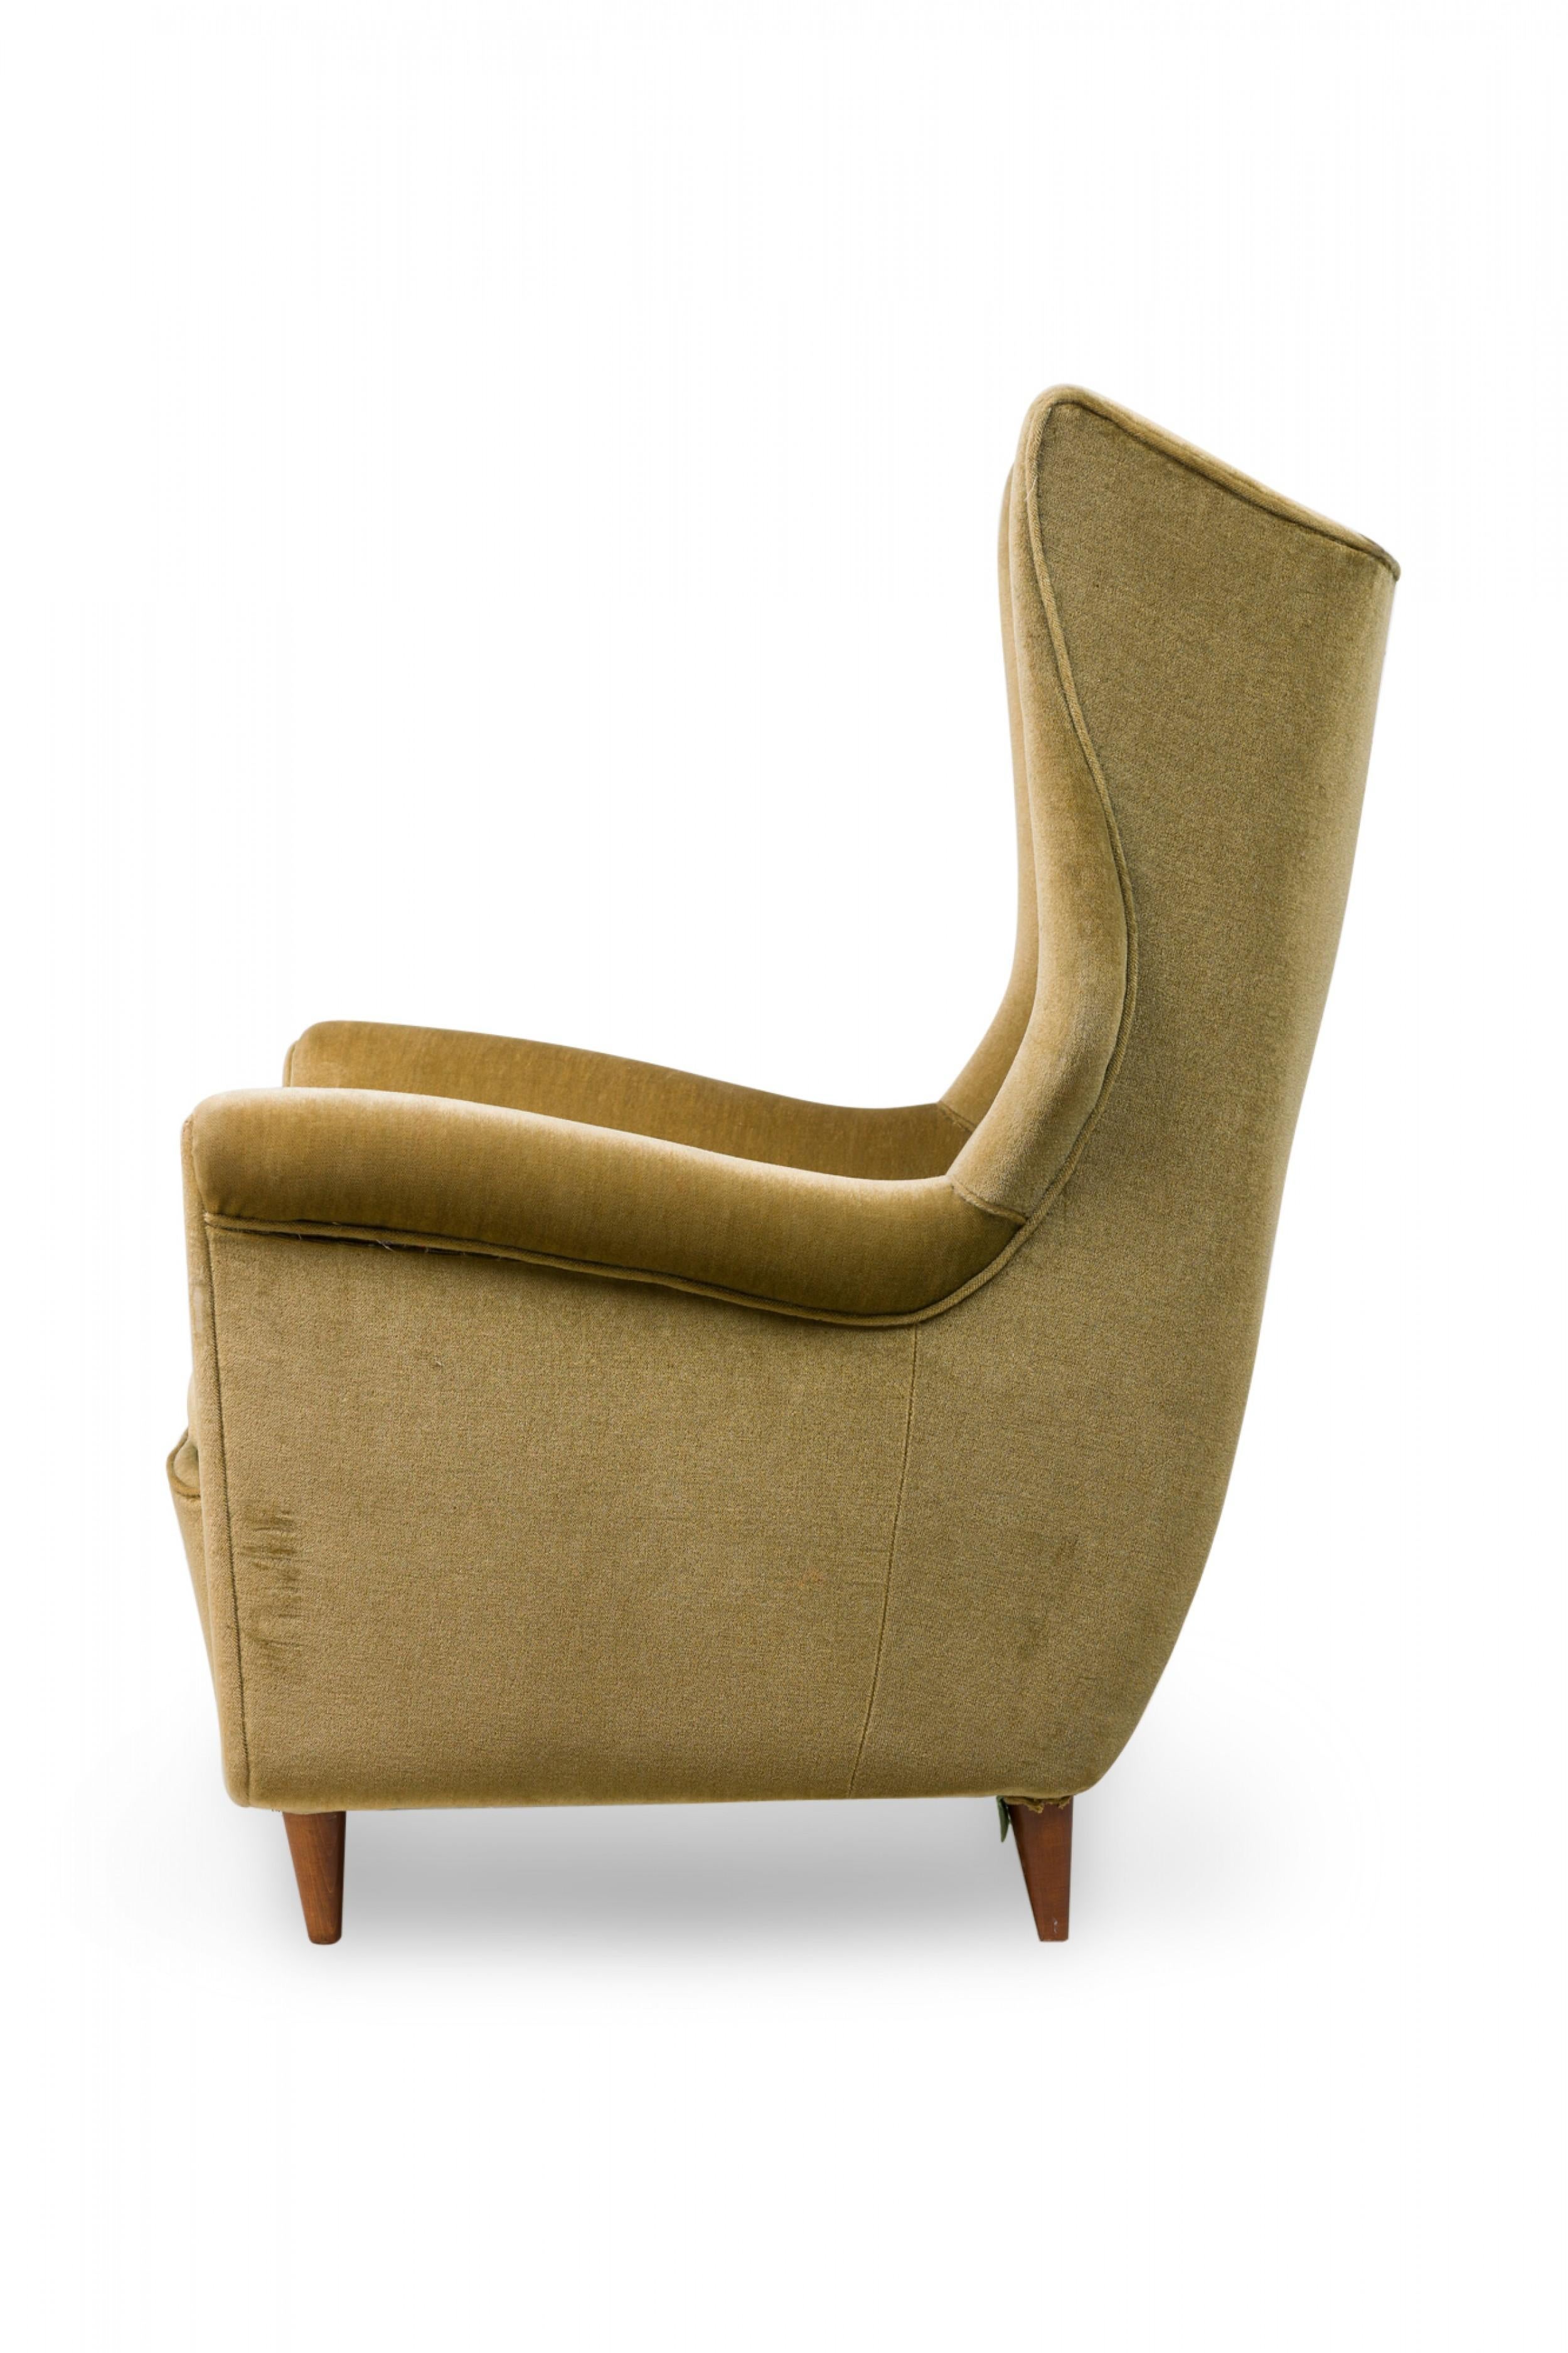 20th Century Pair of Midcentury Italian Modern Gold Velvet Upholstered Lounge / Armchairs For Sale